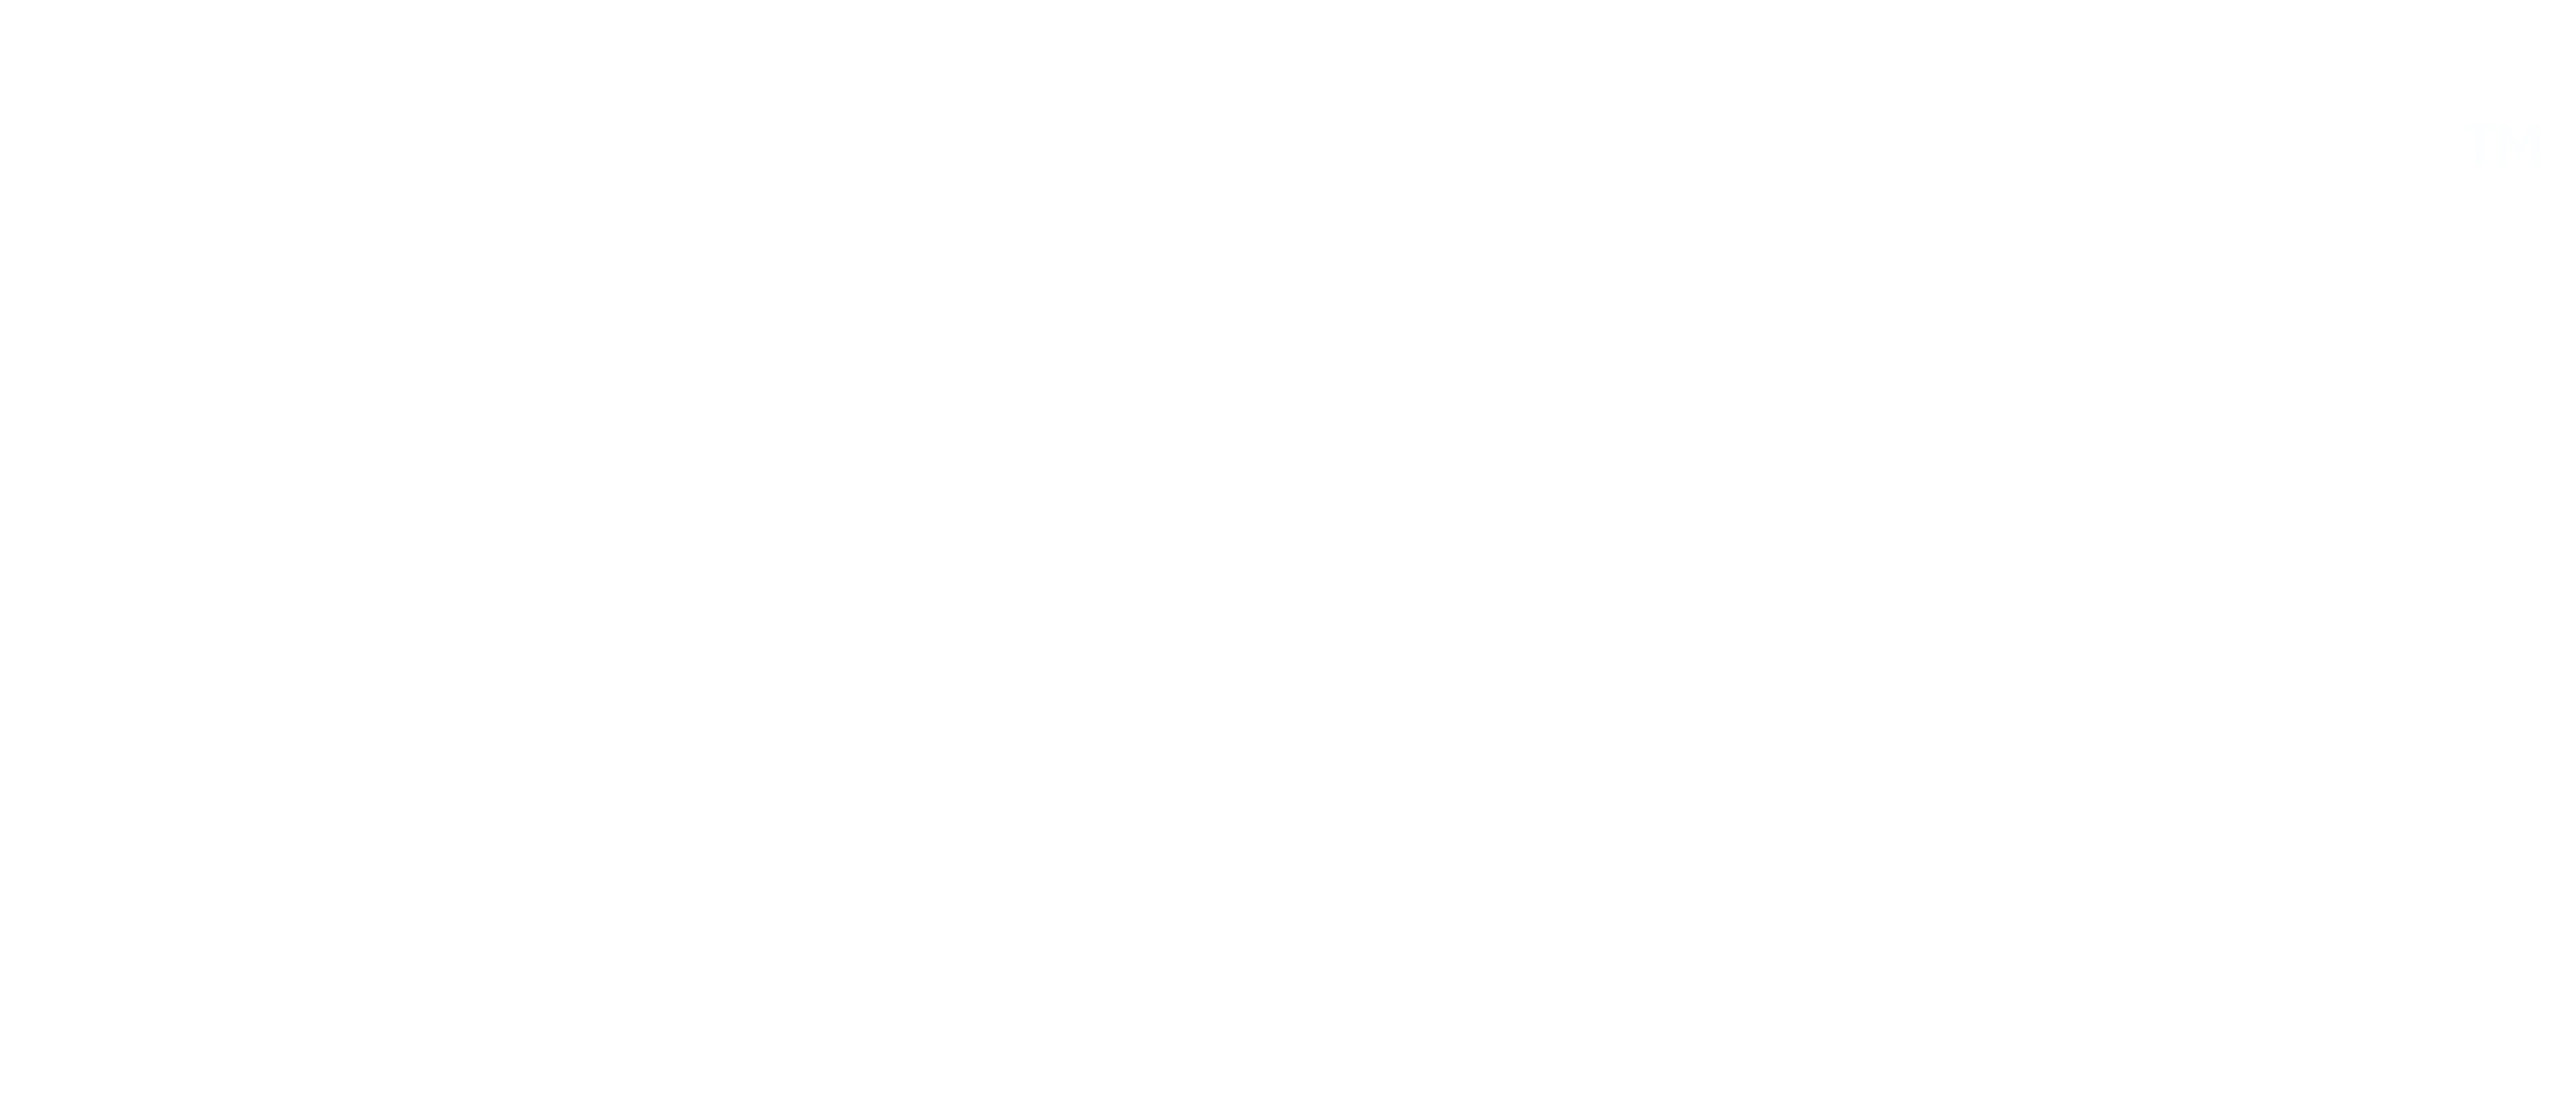 Silent Beacon Safety App Device white logo